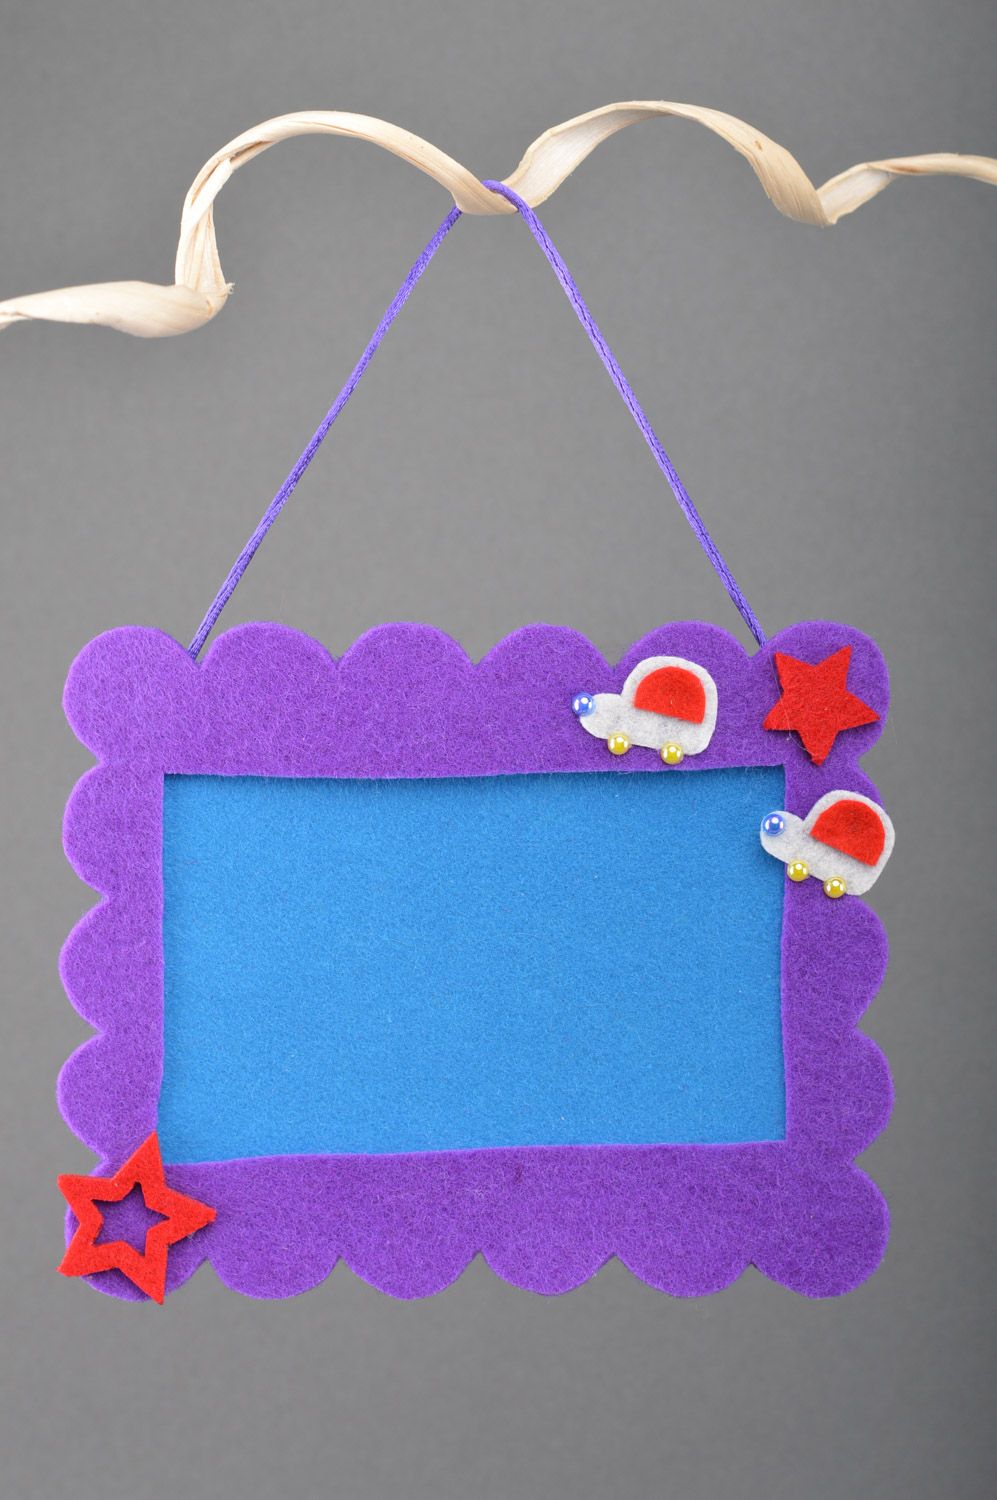 Handmade Fotorahmen aus Filz an Wand in Kinderzimmer lilafarbig wunderschön  foto 3